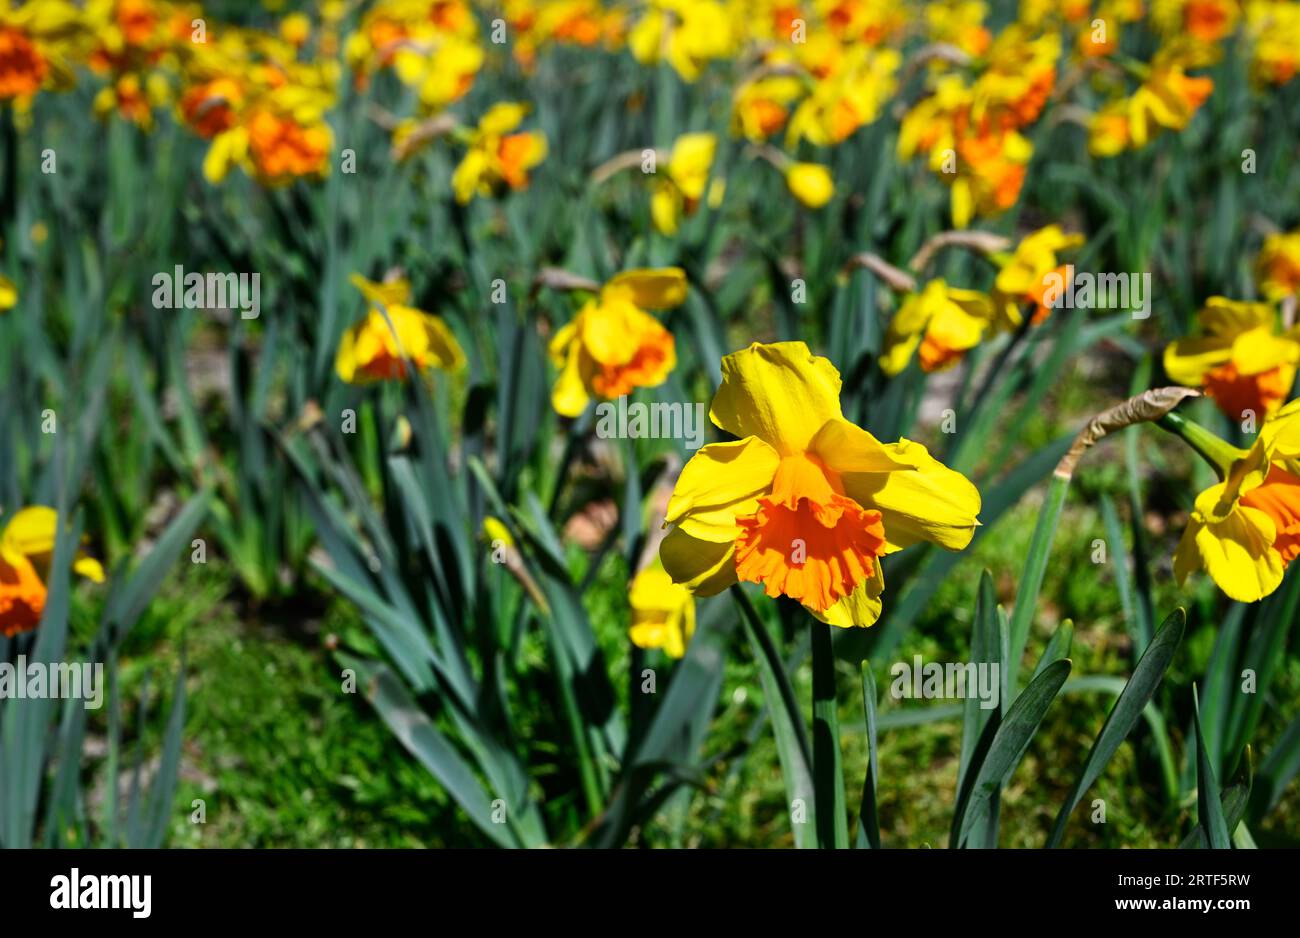 Frühling in Christchurch, Neuseeland. Narzissen in voller Blüte im Flay Park. Nahaufnahme. Stockfoto